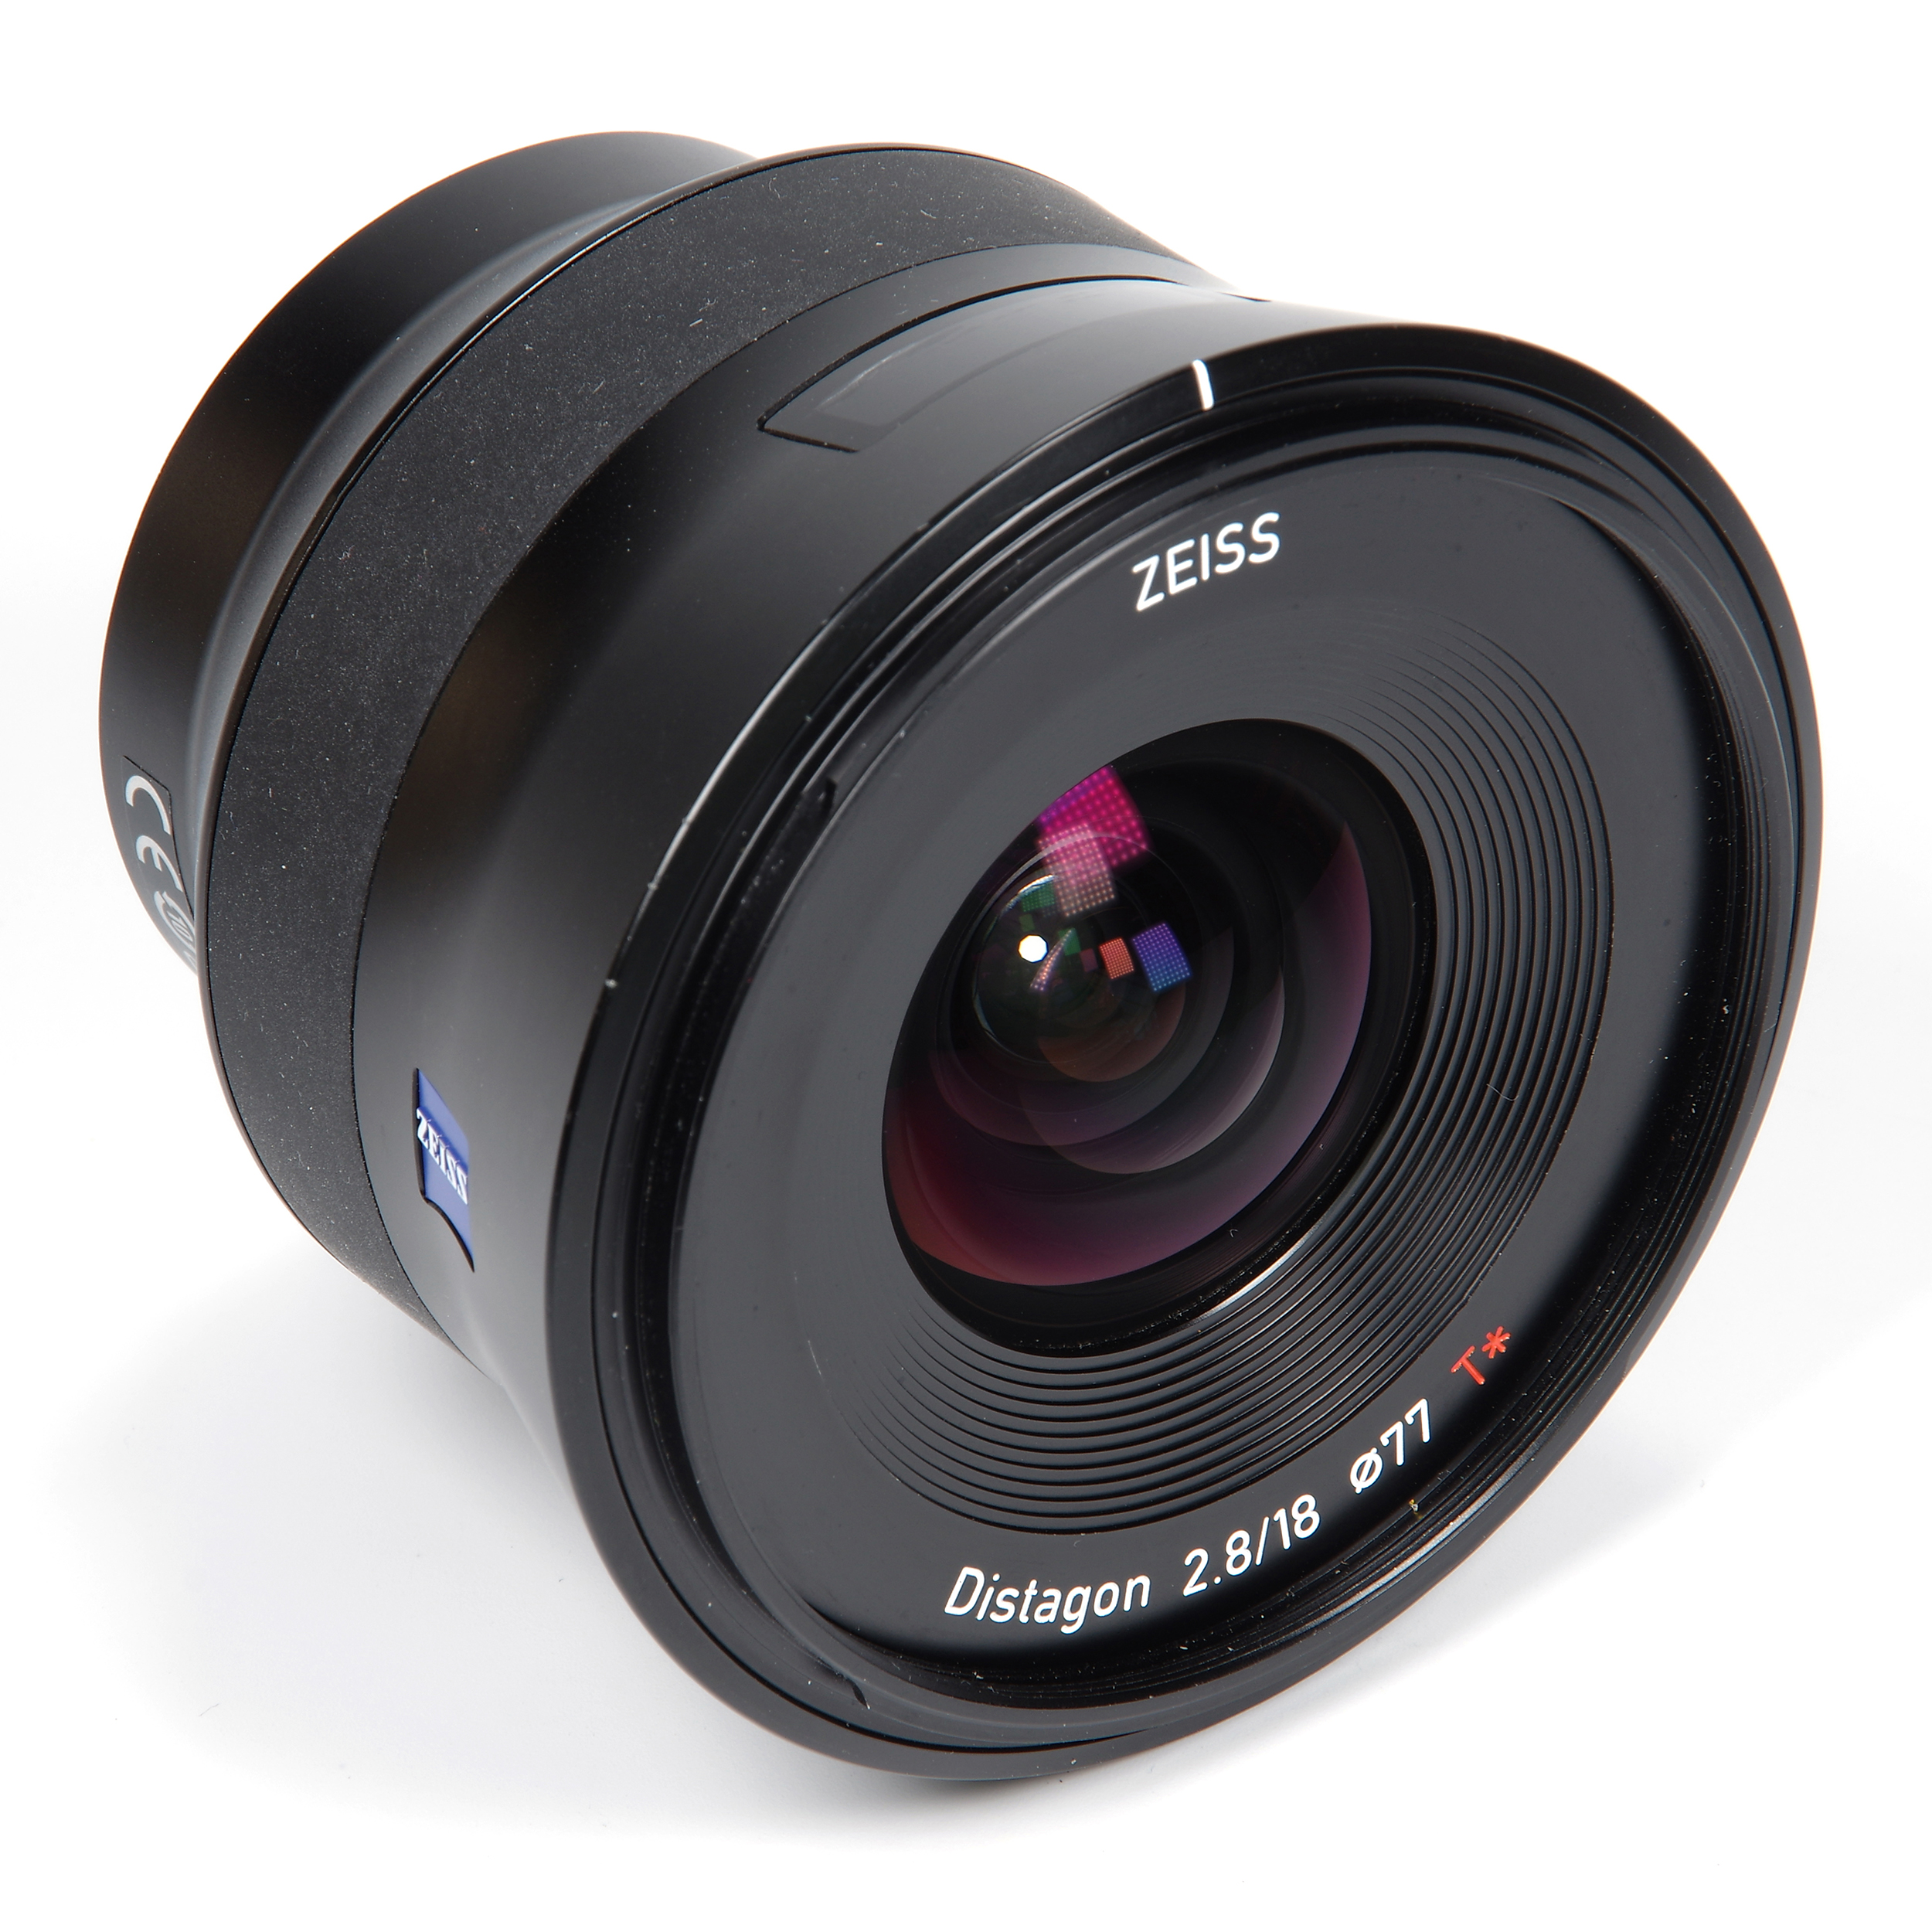 لنز دوربین زایس مدل Batis 18mm F2.8 for sony